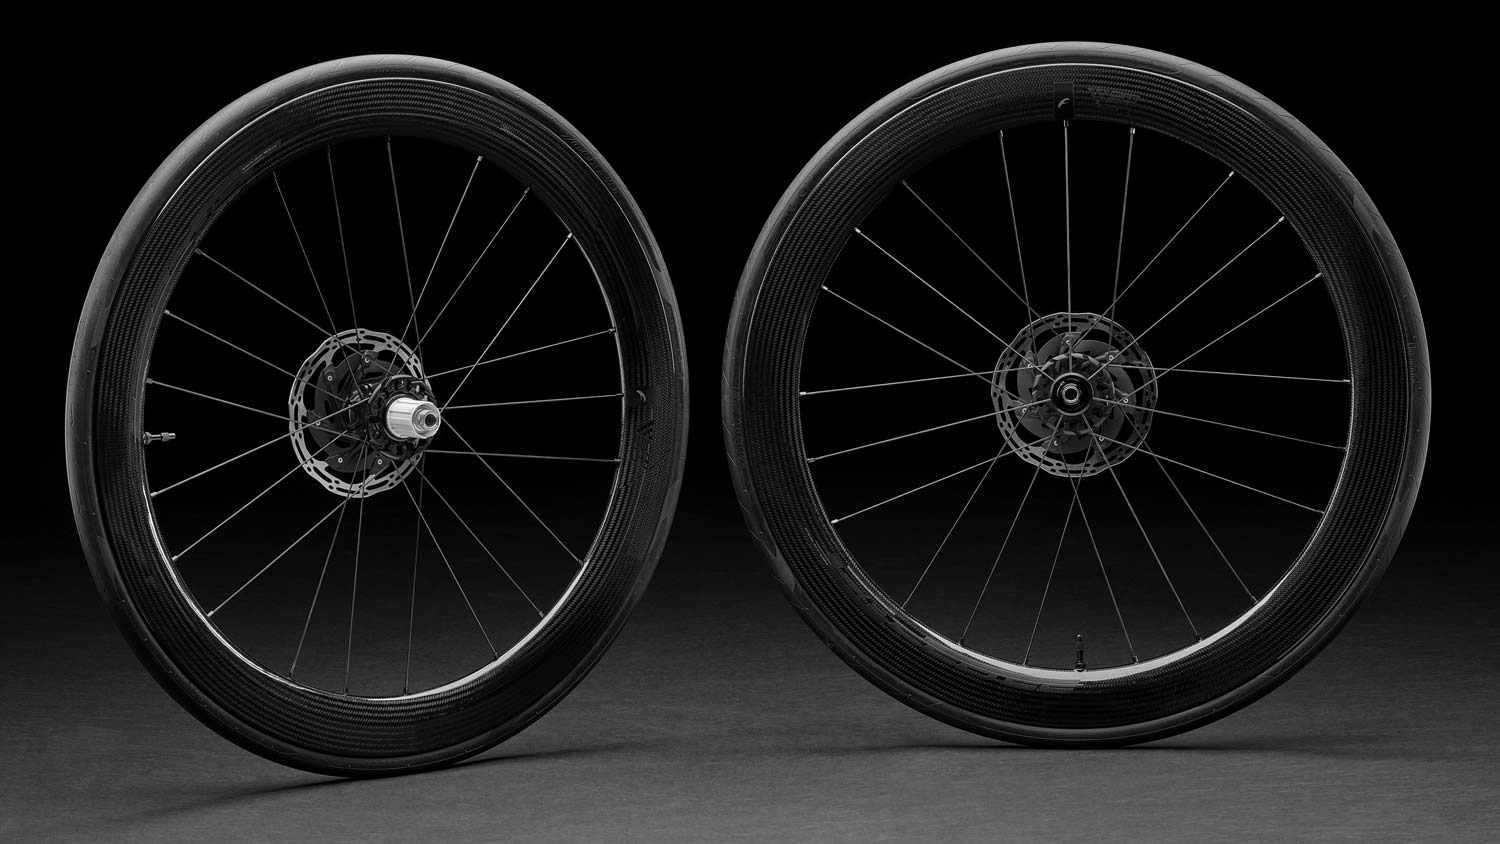 2021-Fulcrum-Speed-CMPTZN-40-55-DB-aero-carbon-road-wheels_55mm-40mm-aerodynamic-carbon-tubeless-disc-brake-road-bike-race-wheels_55mm-deep-pair.jpg